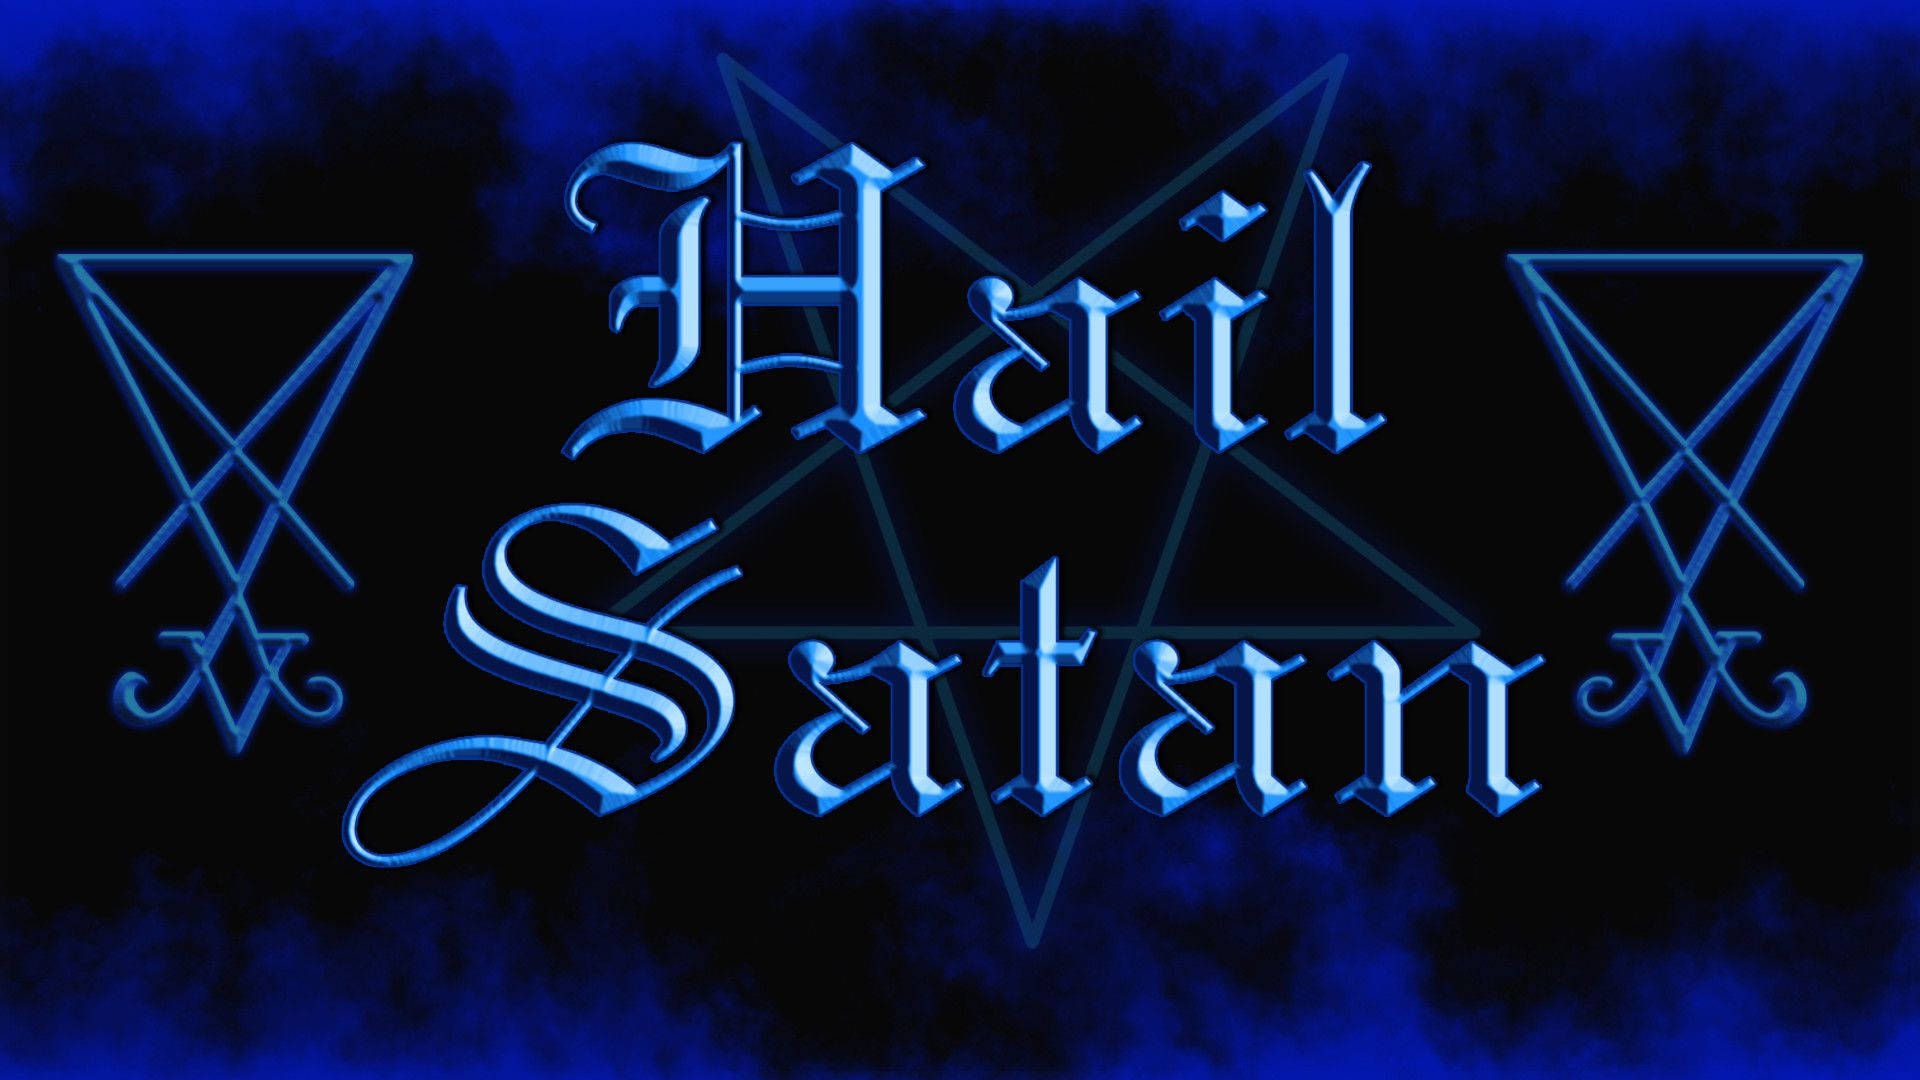 Satanic 1920X1080 Wallpaper and Background Image